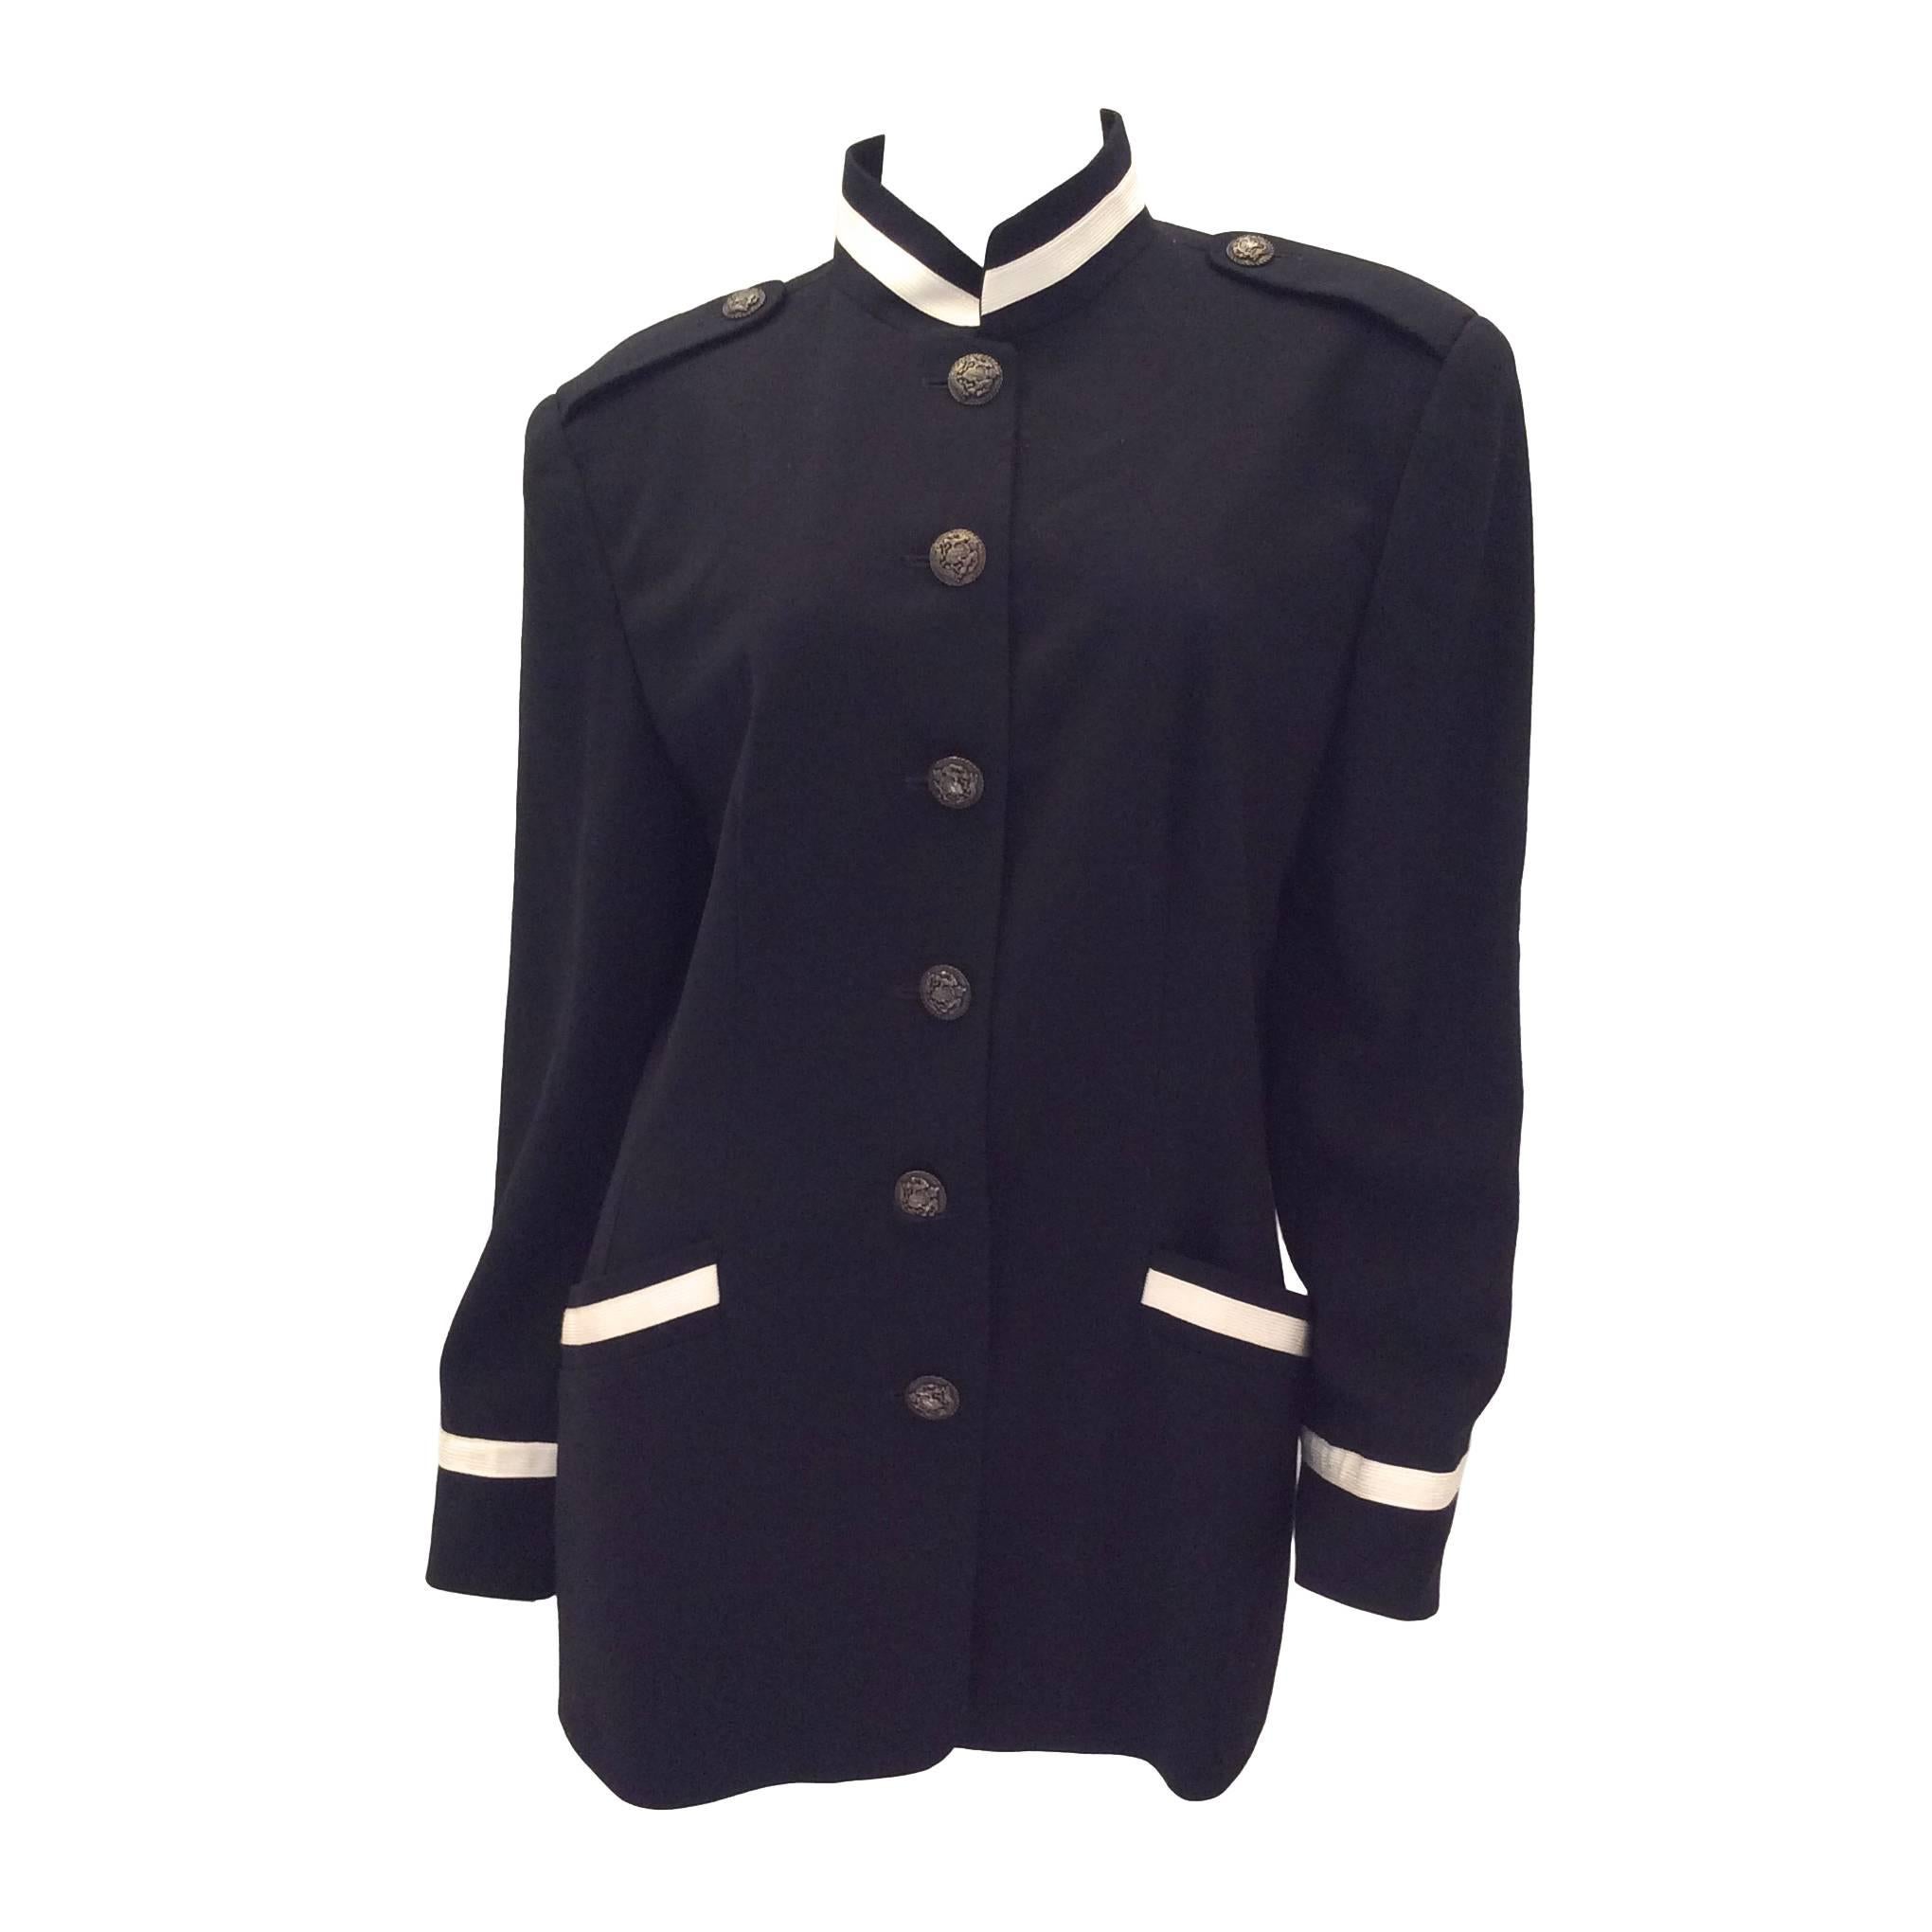 DKNY Donna Karen New York Black Military Style Jacket For Sale